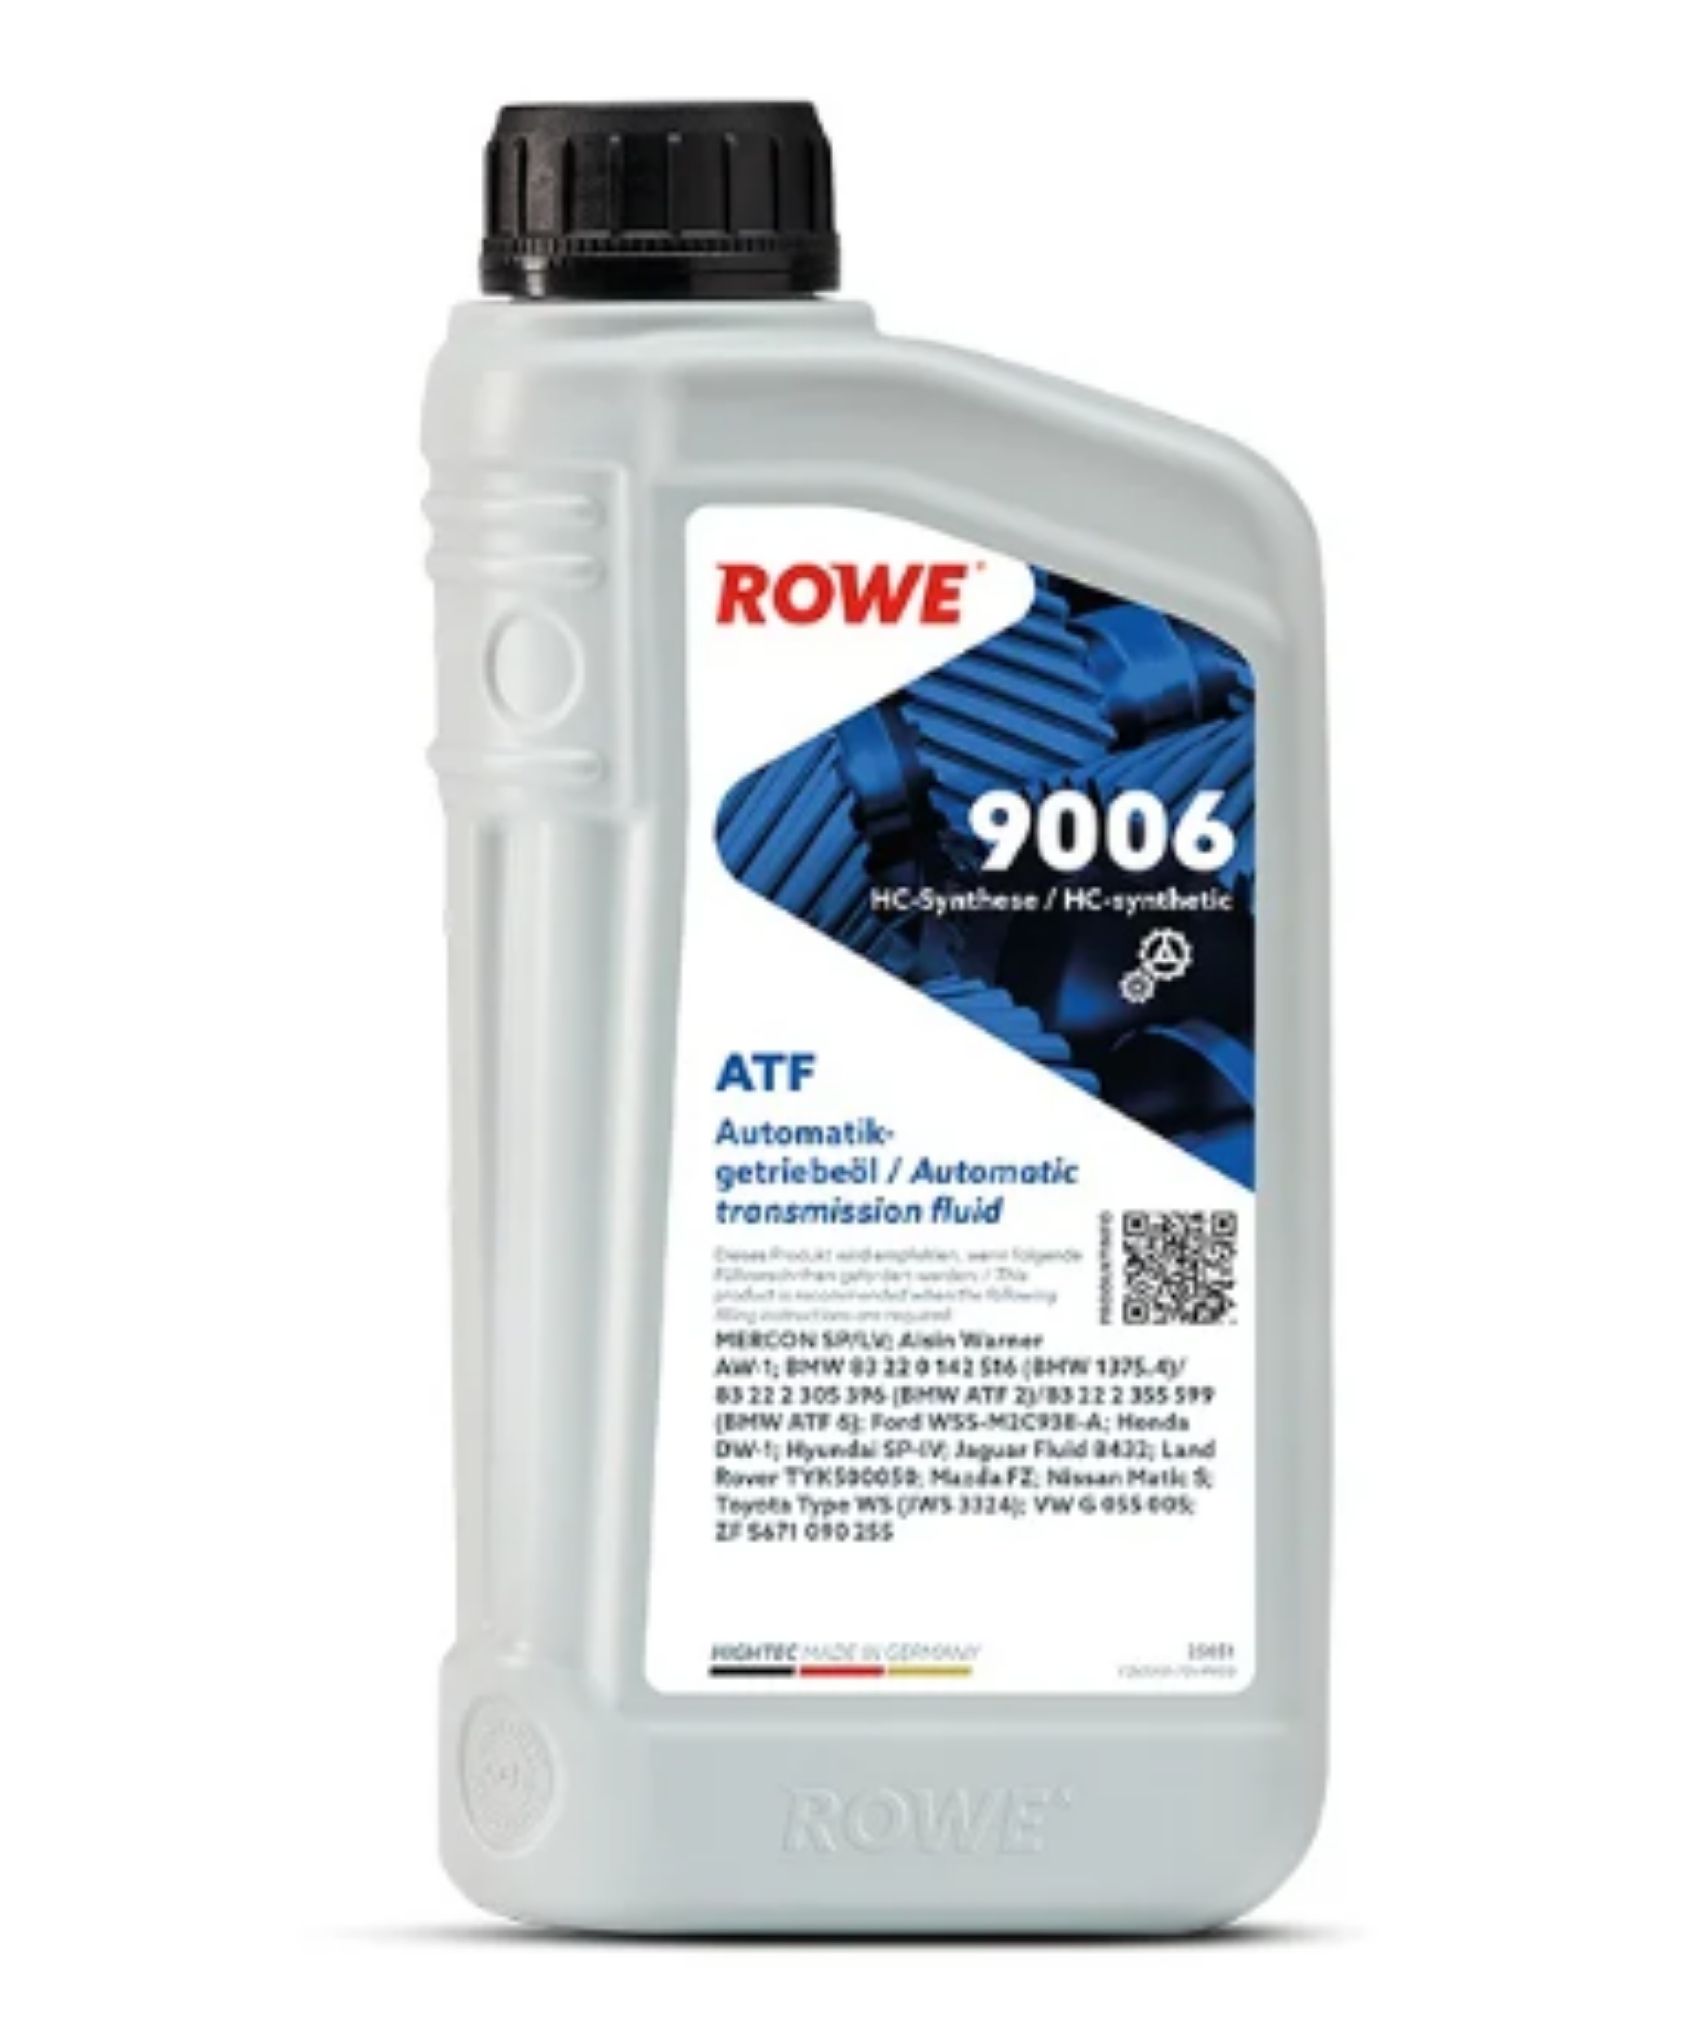 ROWE HIGHTEC ATF 9006 1 Litre